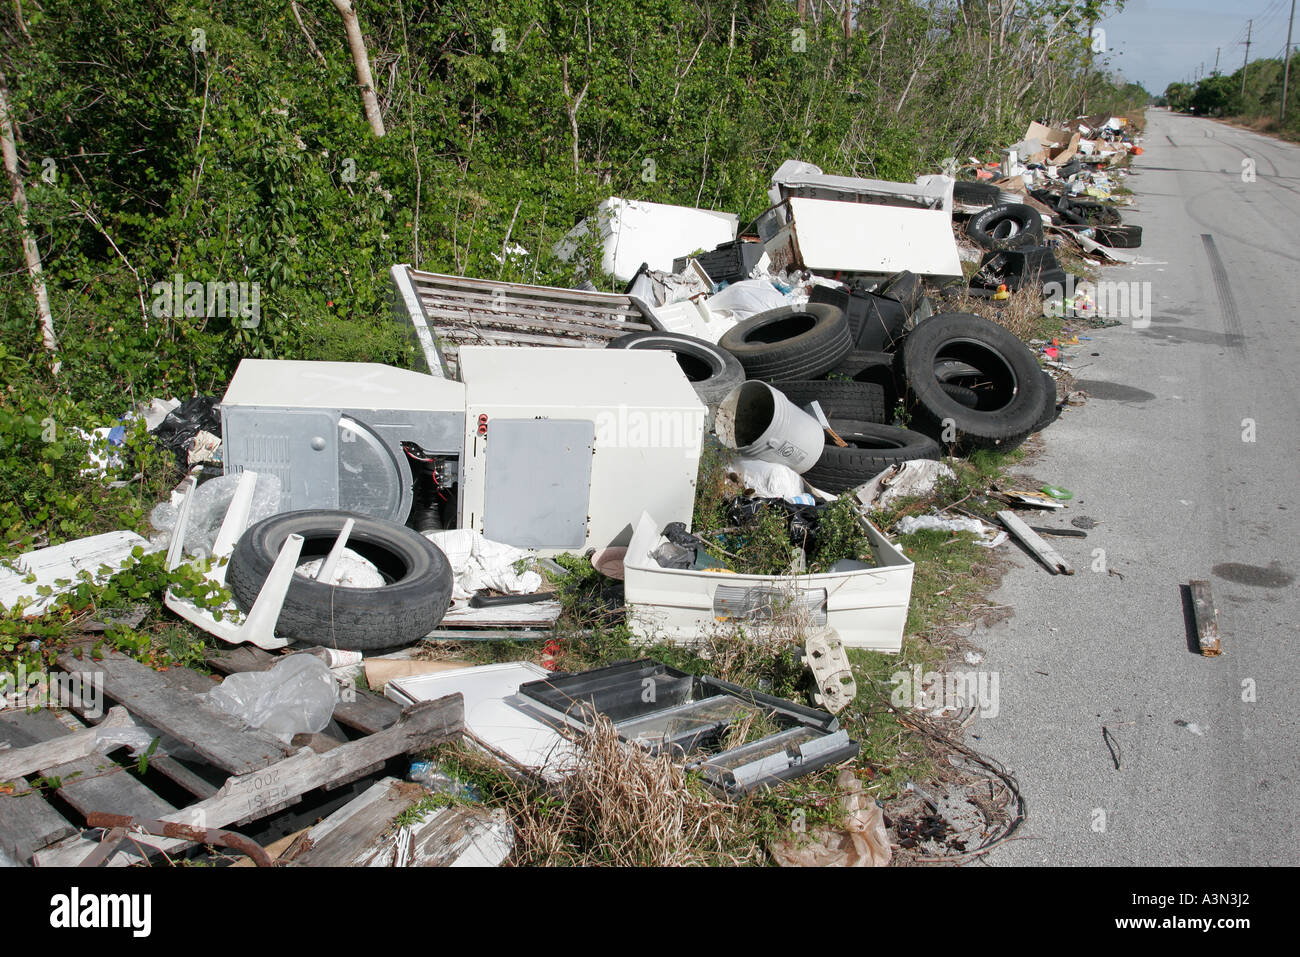 Miami Florida,Homestead,illegal dumping site,roadside,tires,appliances